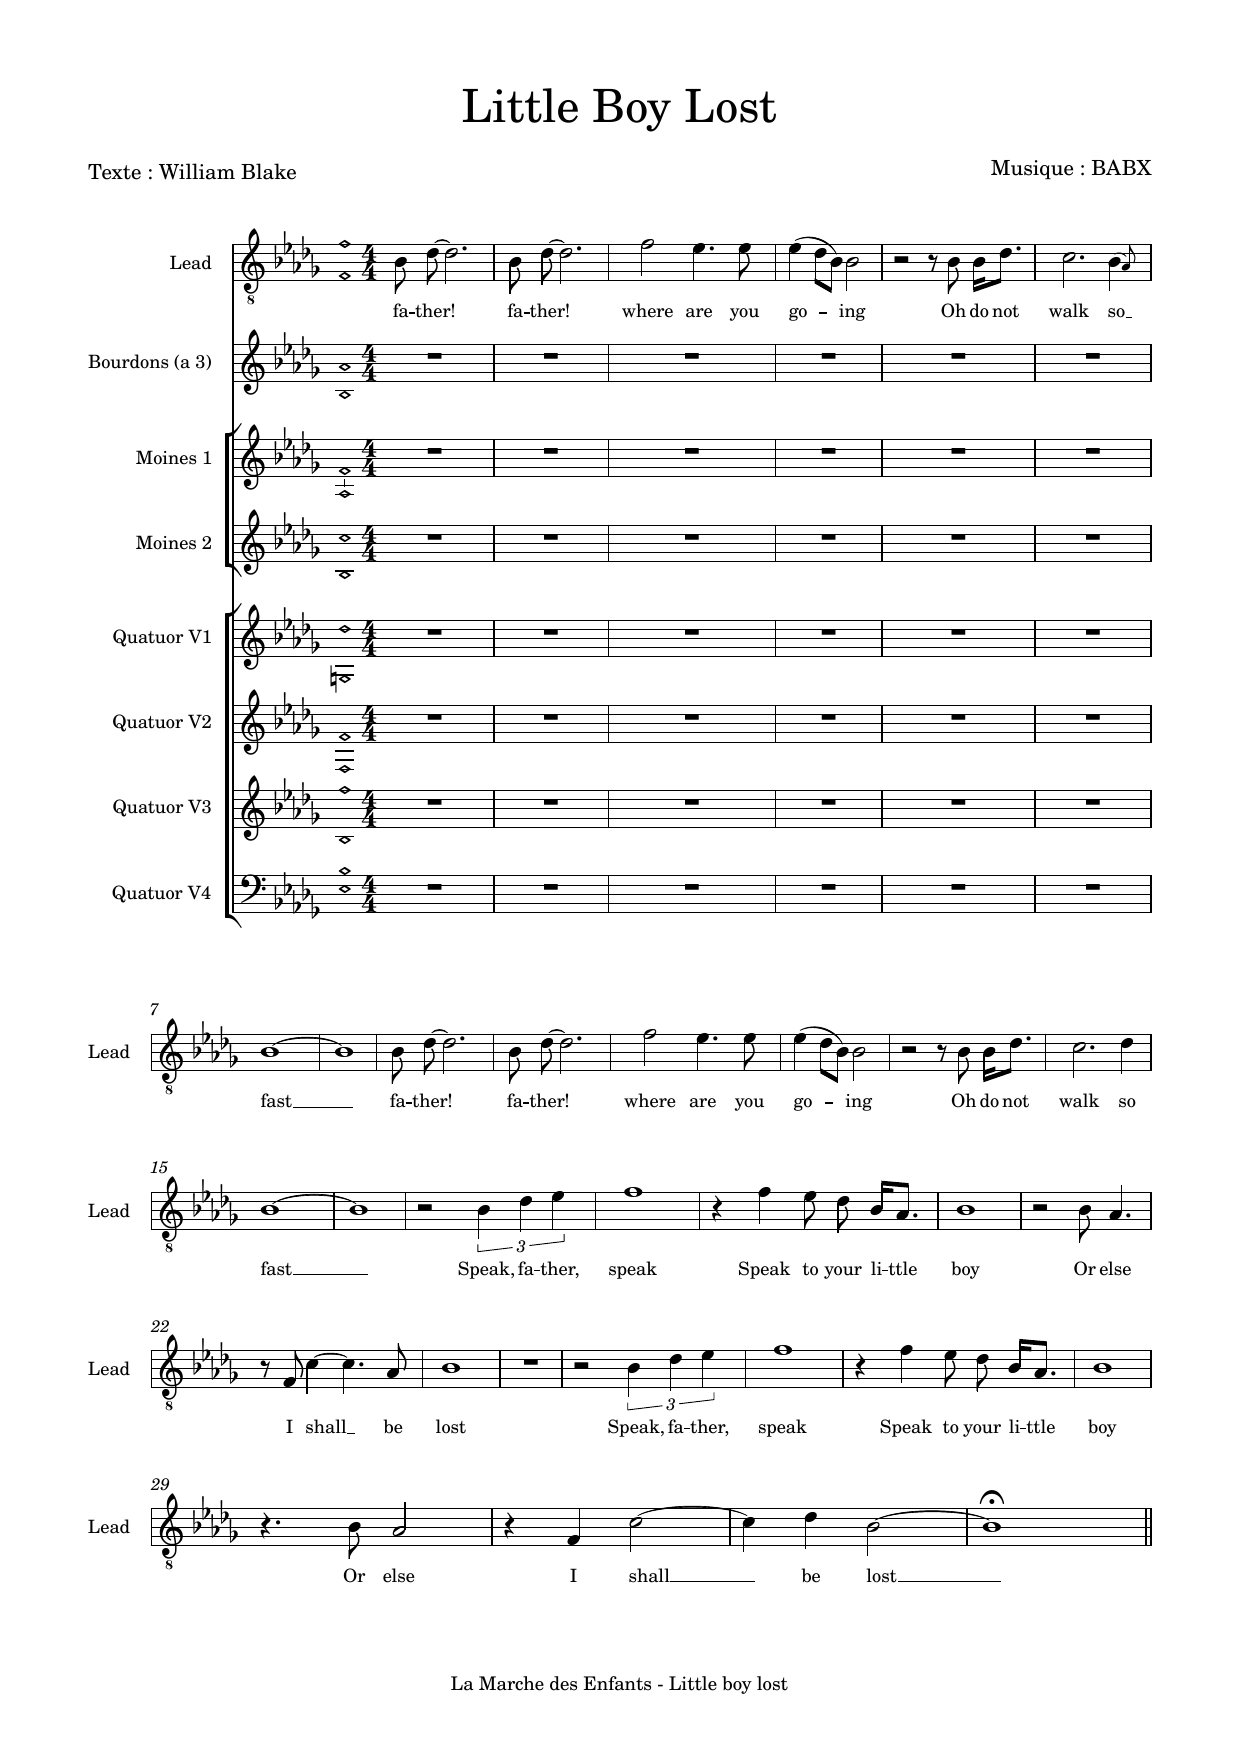 David Babin (Babx) The Little Boy Lost sheet music notes printable PDF score